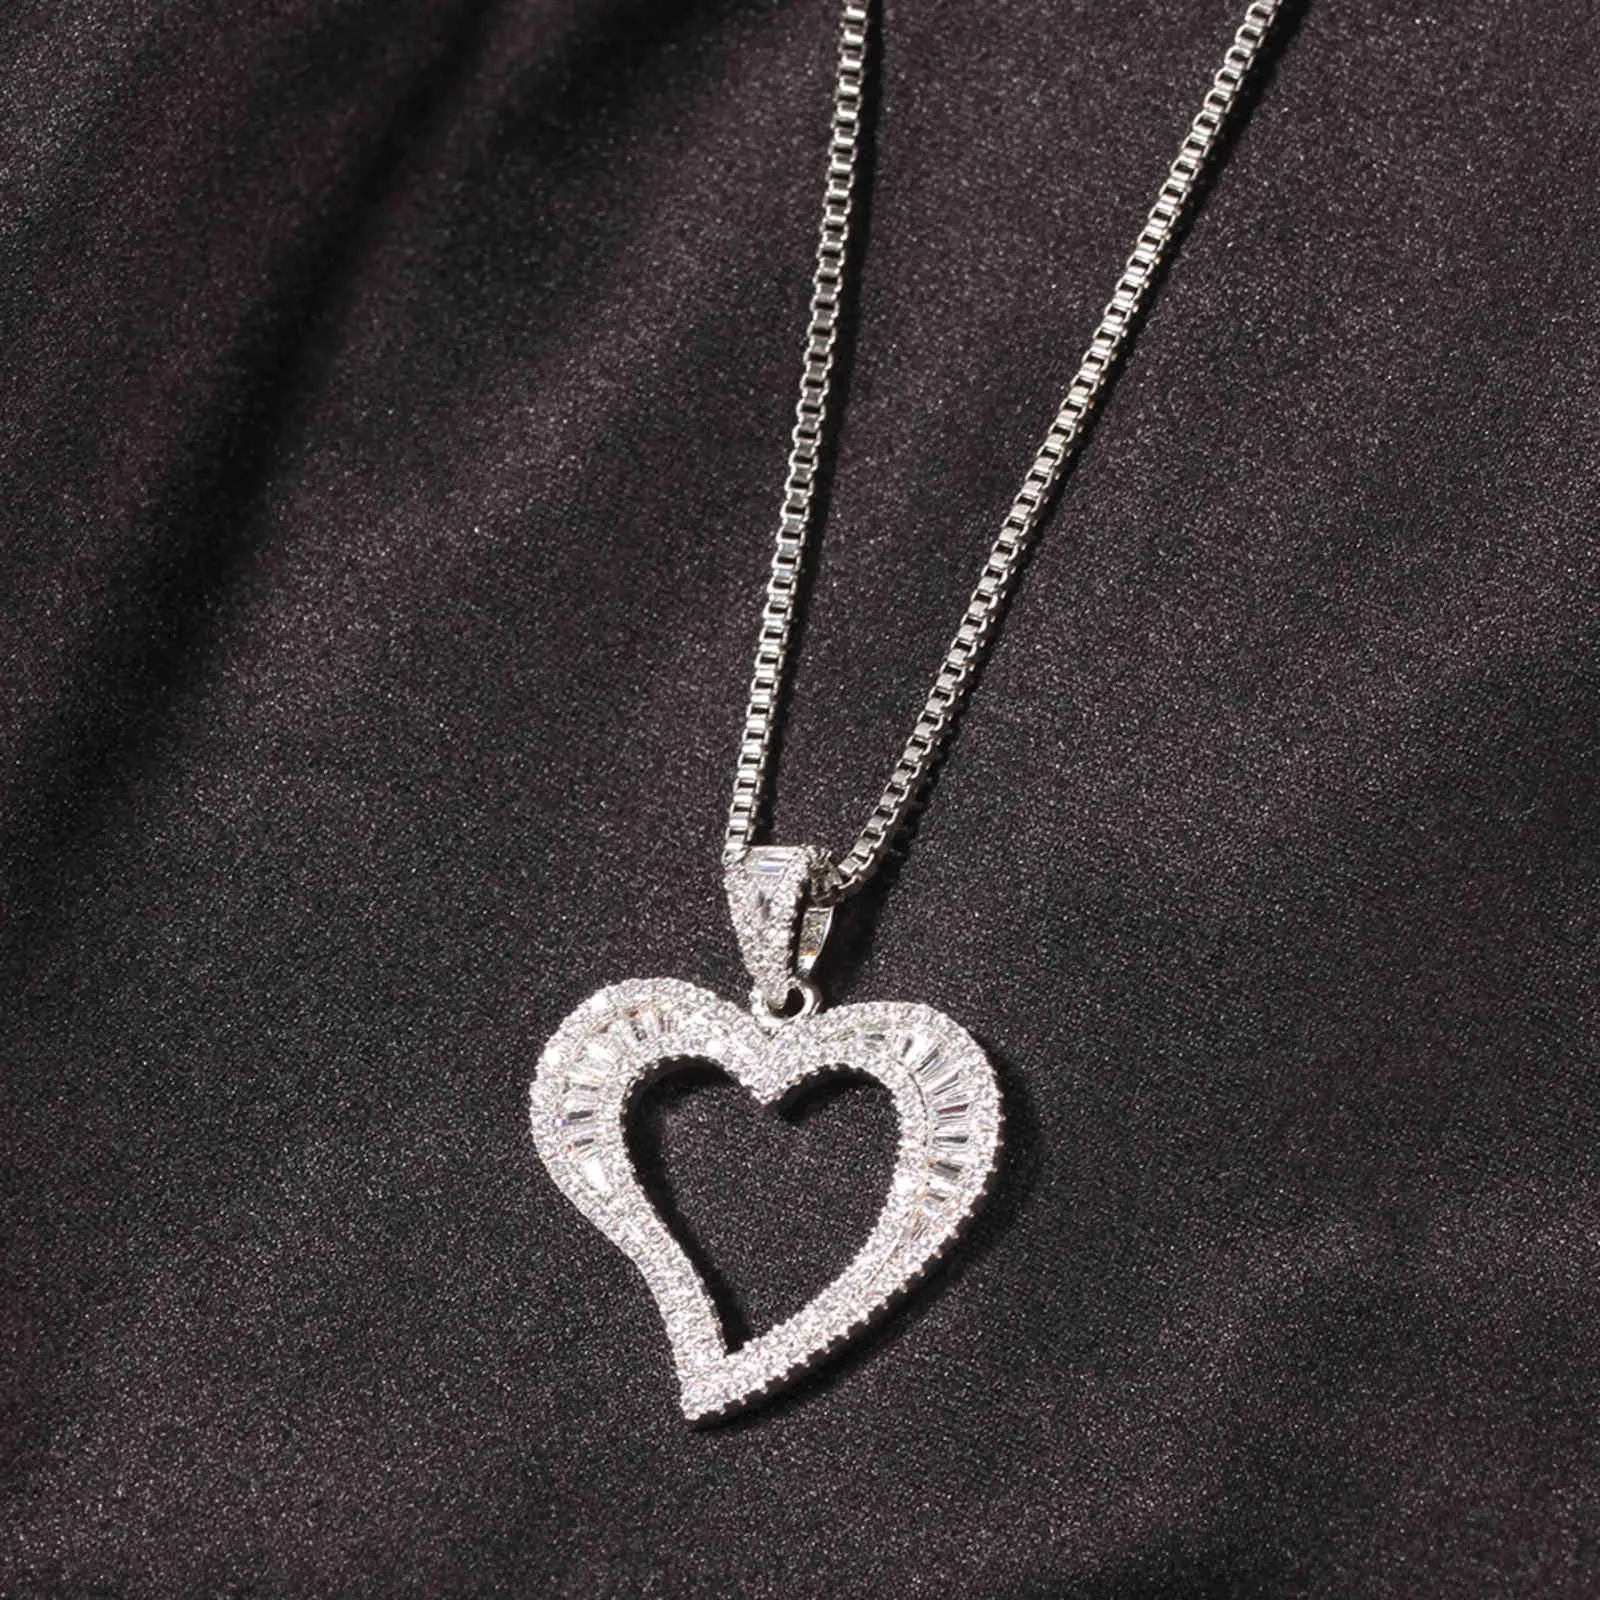 UWIN Mini Hollow Heart Beedant Cleaned Out Bling Charm с Заявлением Box Цепь Ожерелье Мужчины Женщины Хип-Хоп Сети для Украшения Подарок